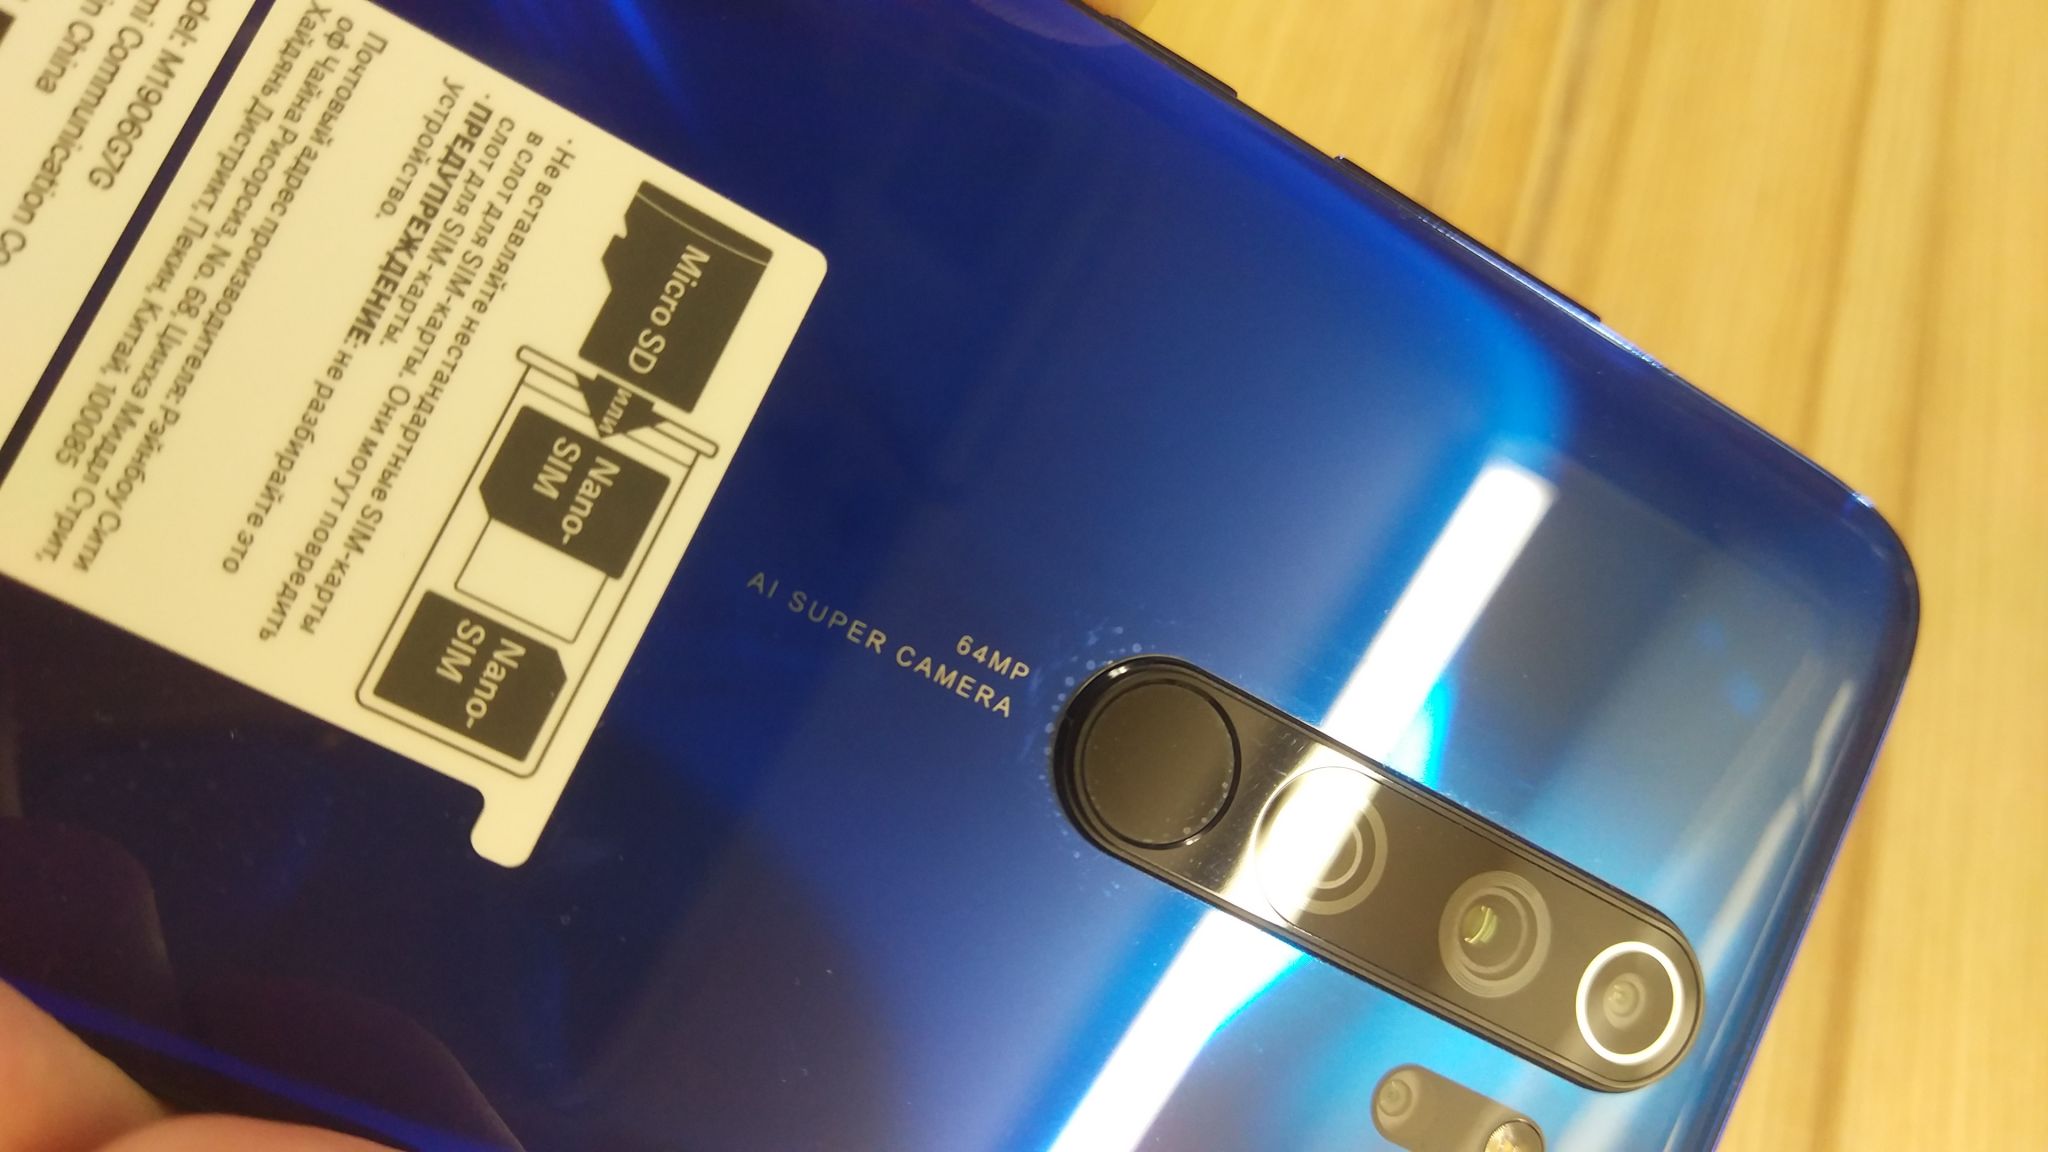 Redmi note 8 pro blue. Xiaomi Redmi Note 8 Pro. Xiaomi Redmi Note 8 Pro 64. Редми нот 8 про 128гб. Xiaomi Redmi 8 Pro 6 64gb.